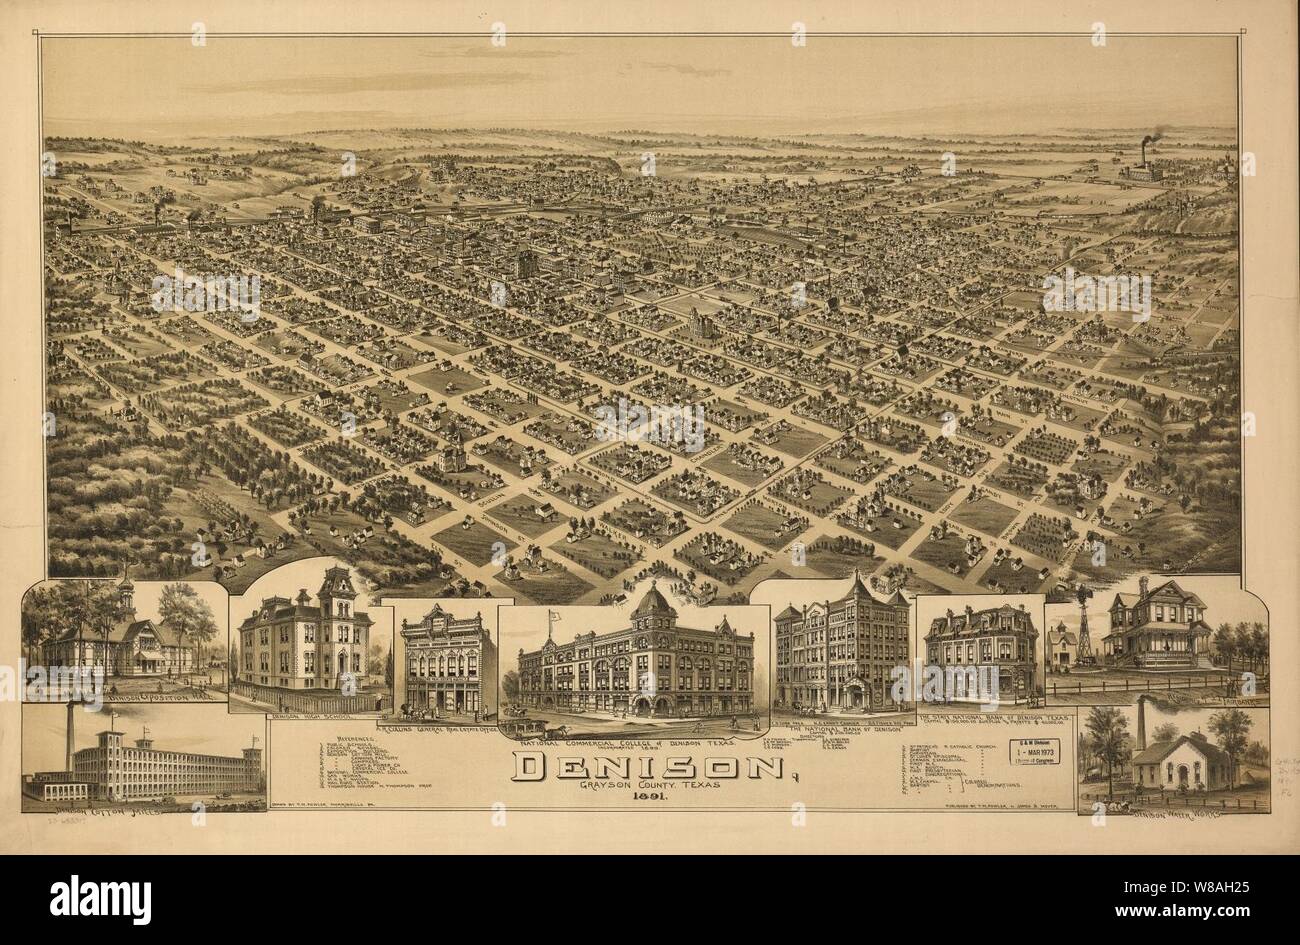 Denison, Grayson County, Texas 1891. Foto de stock